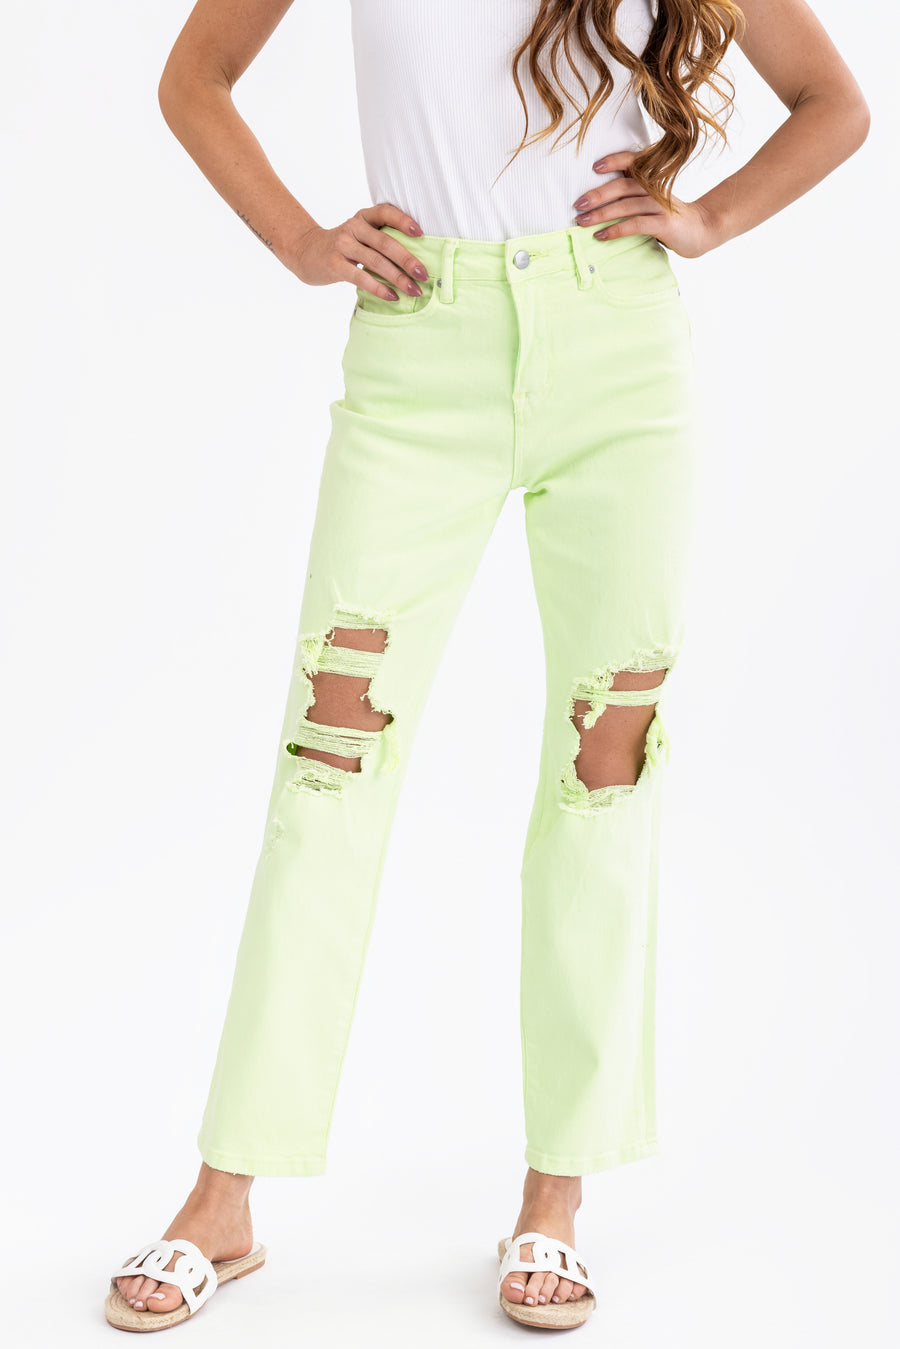 Mica Denim Bright Lime Straight Leg Jeans